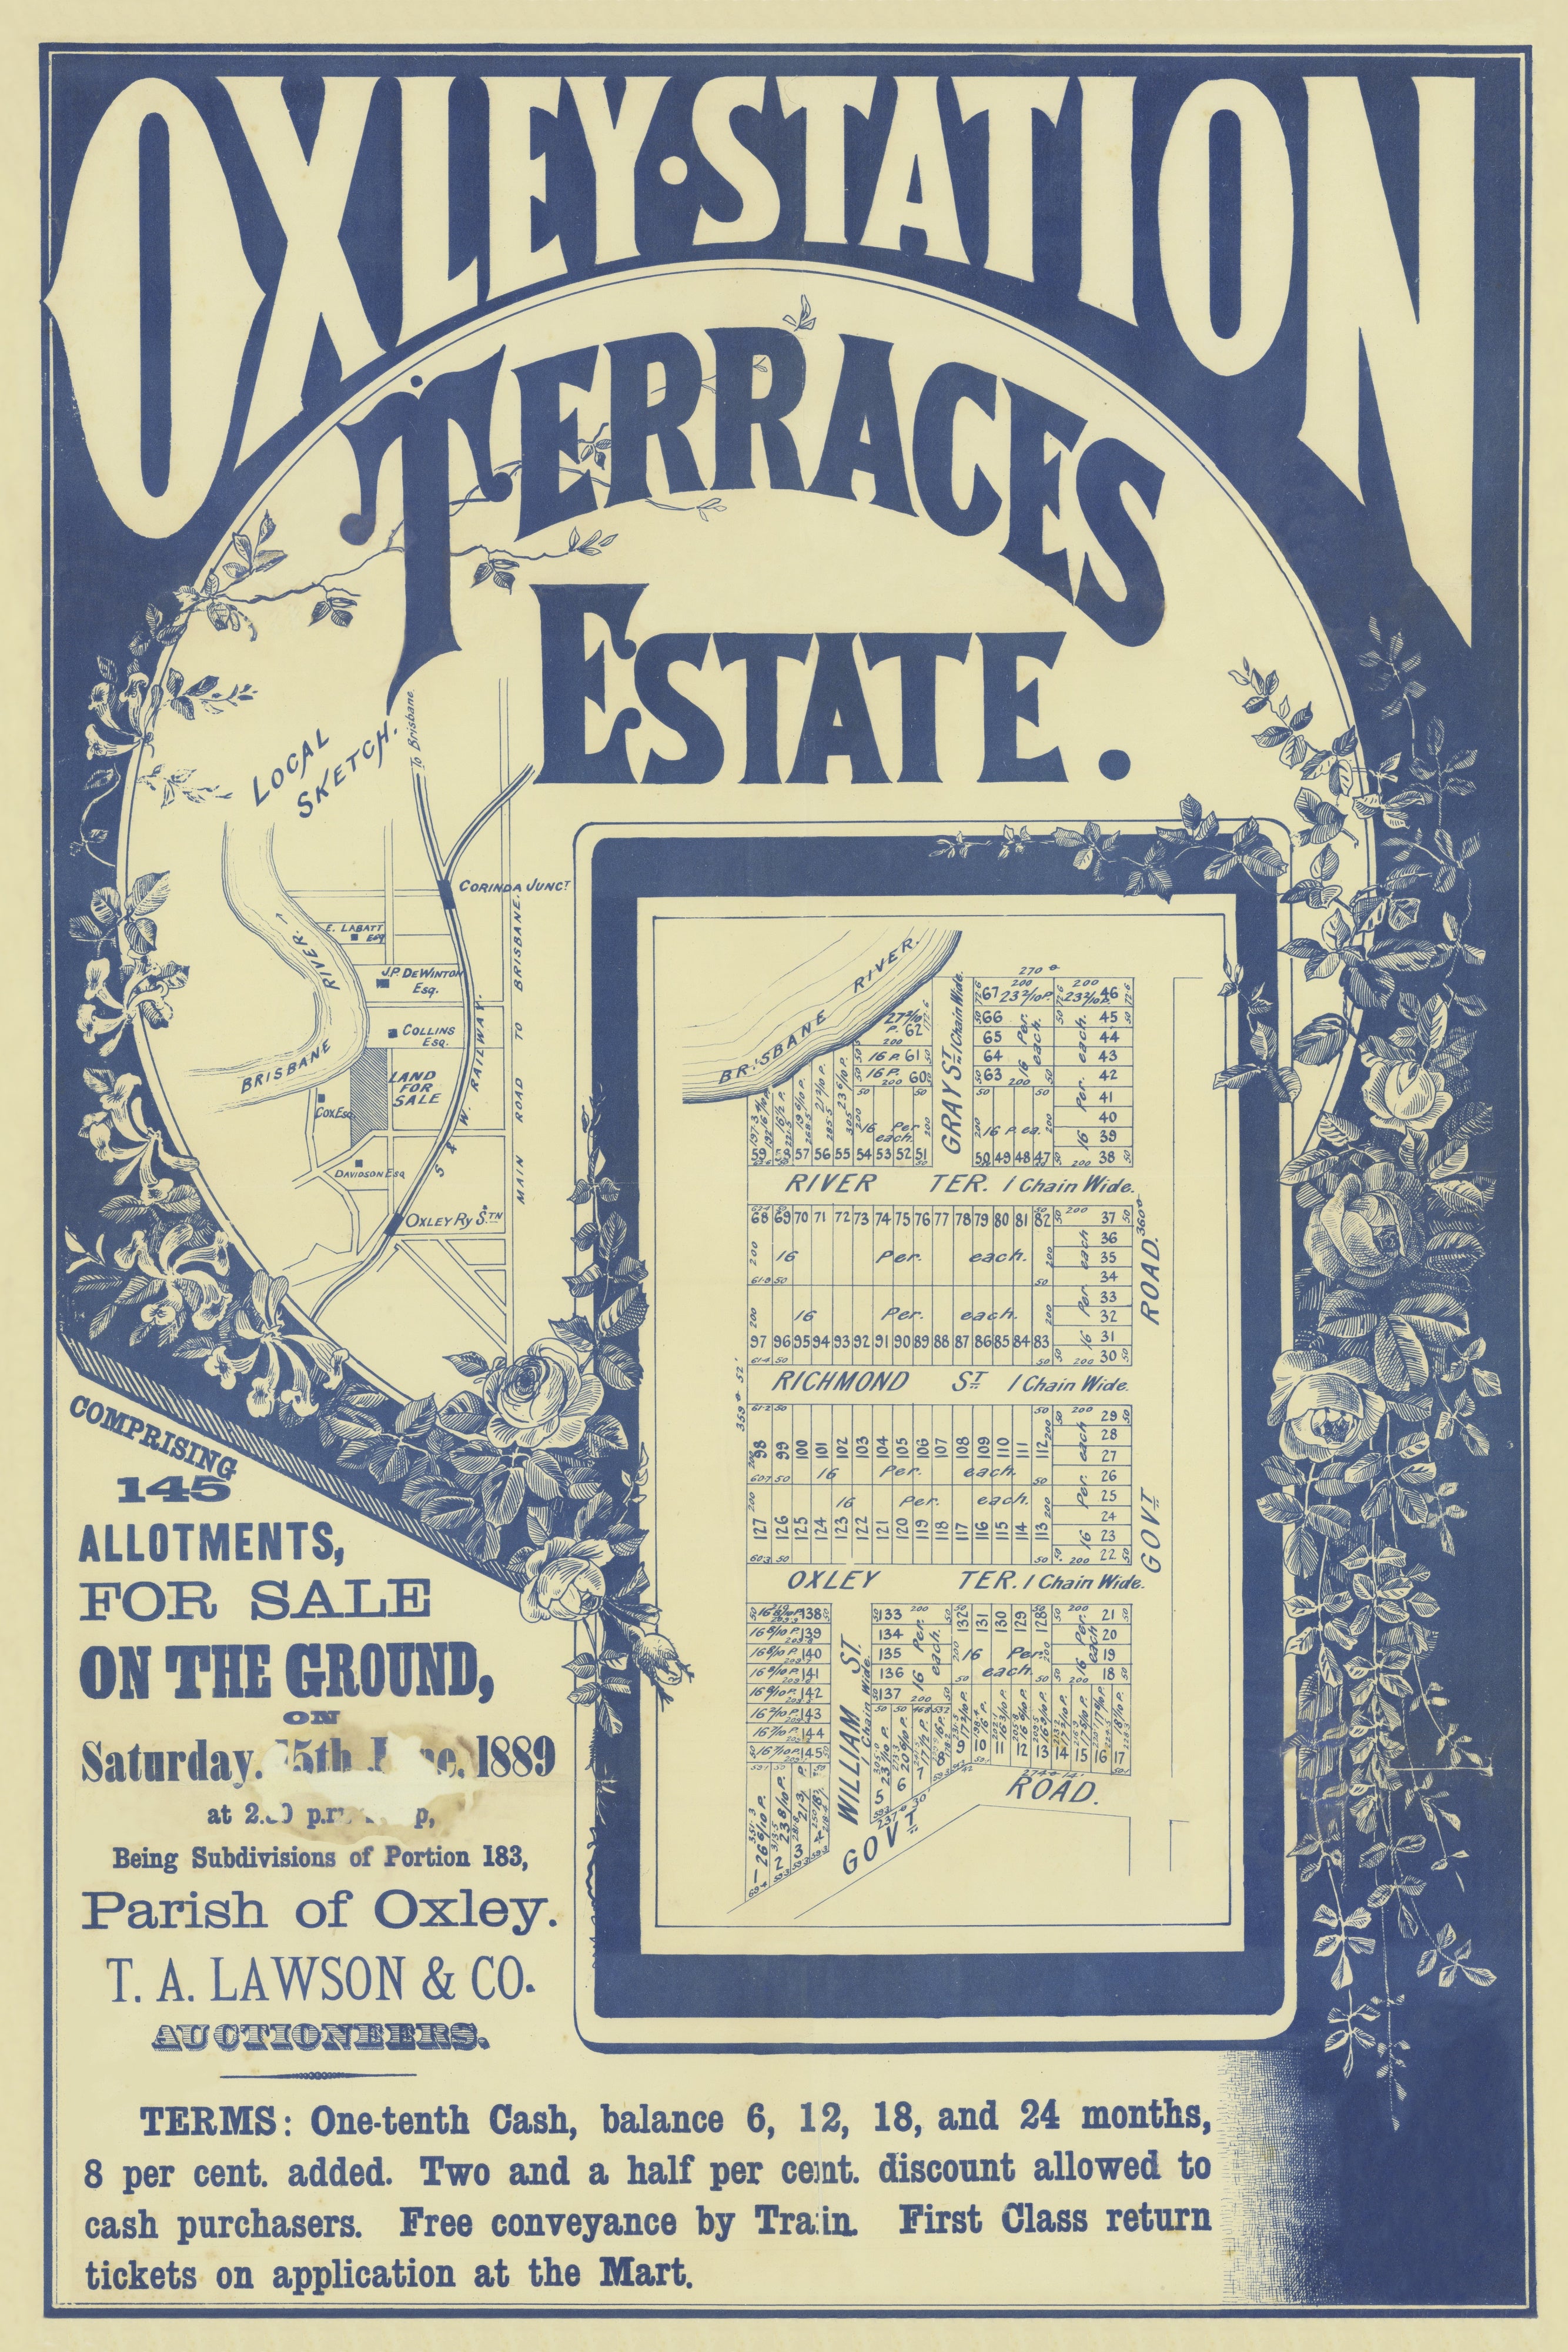 1889 Corinda - Oxley Station Terraces Estate